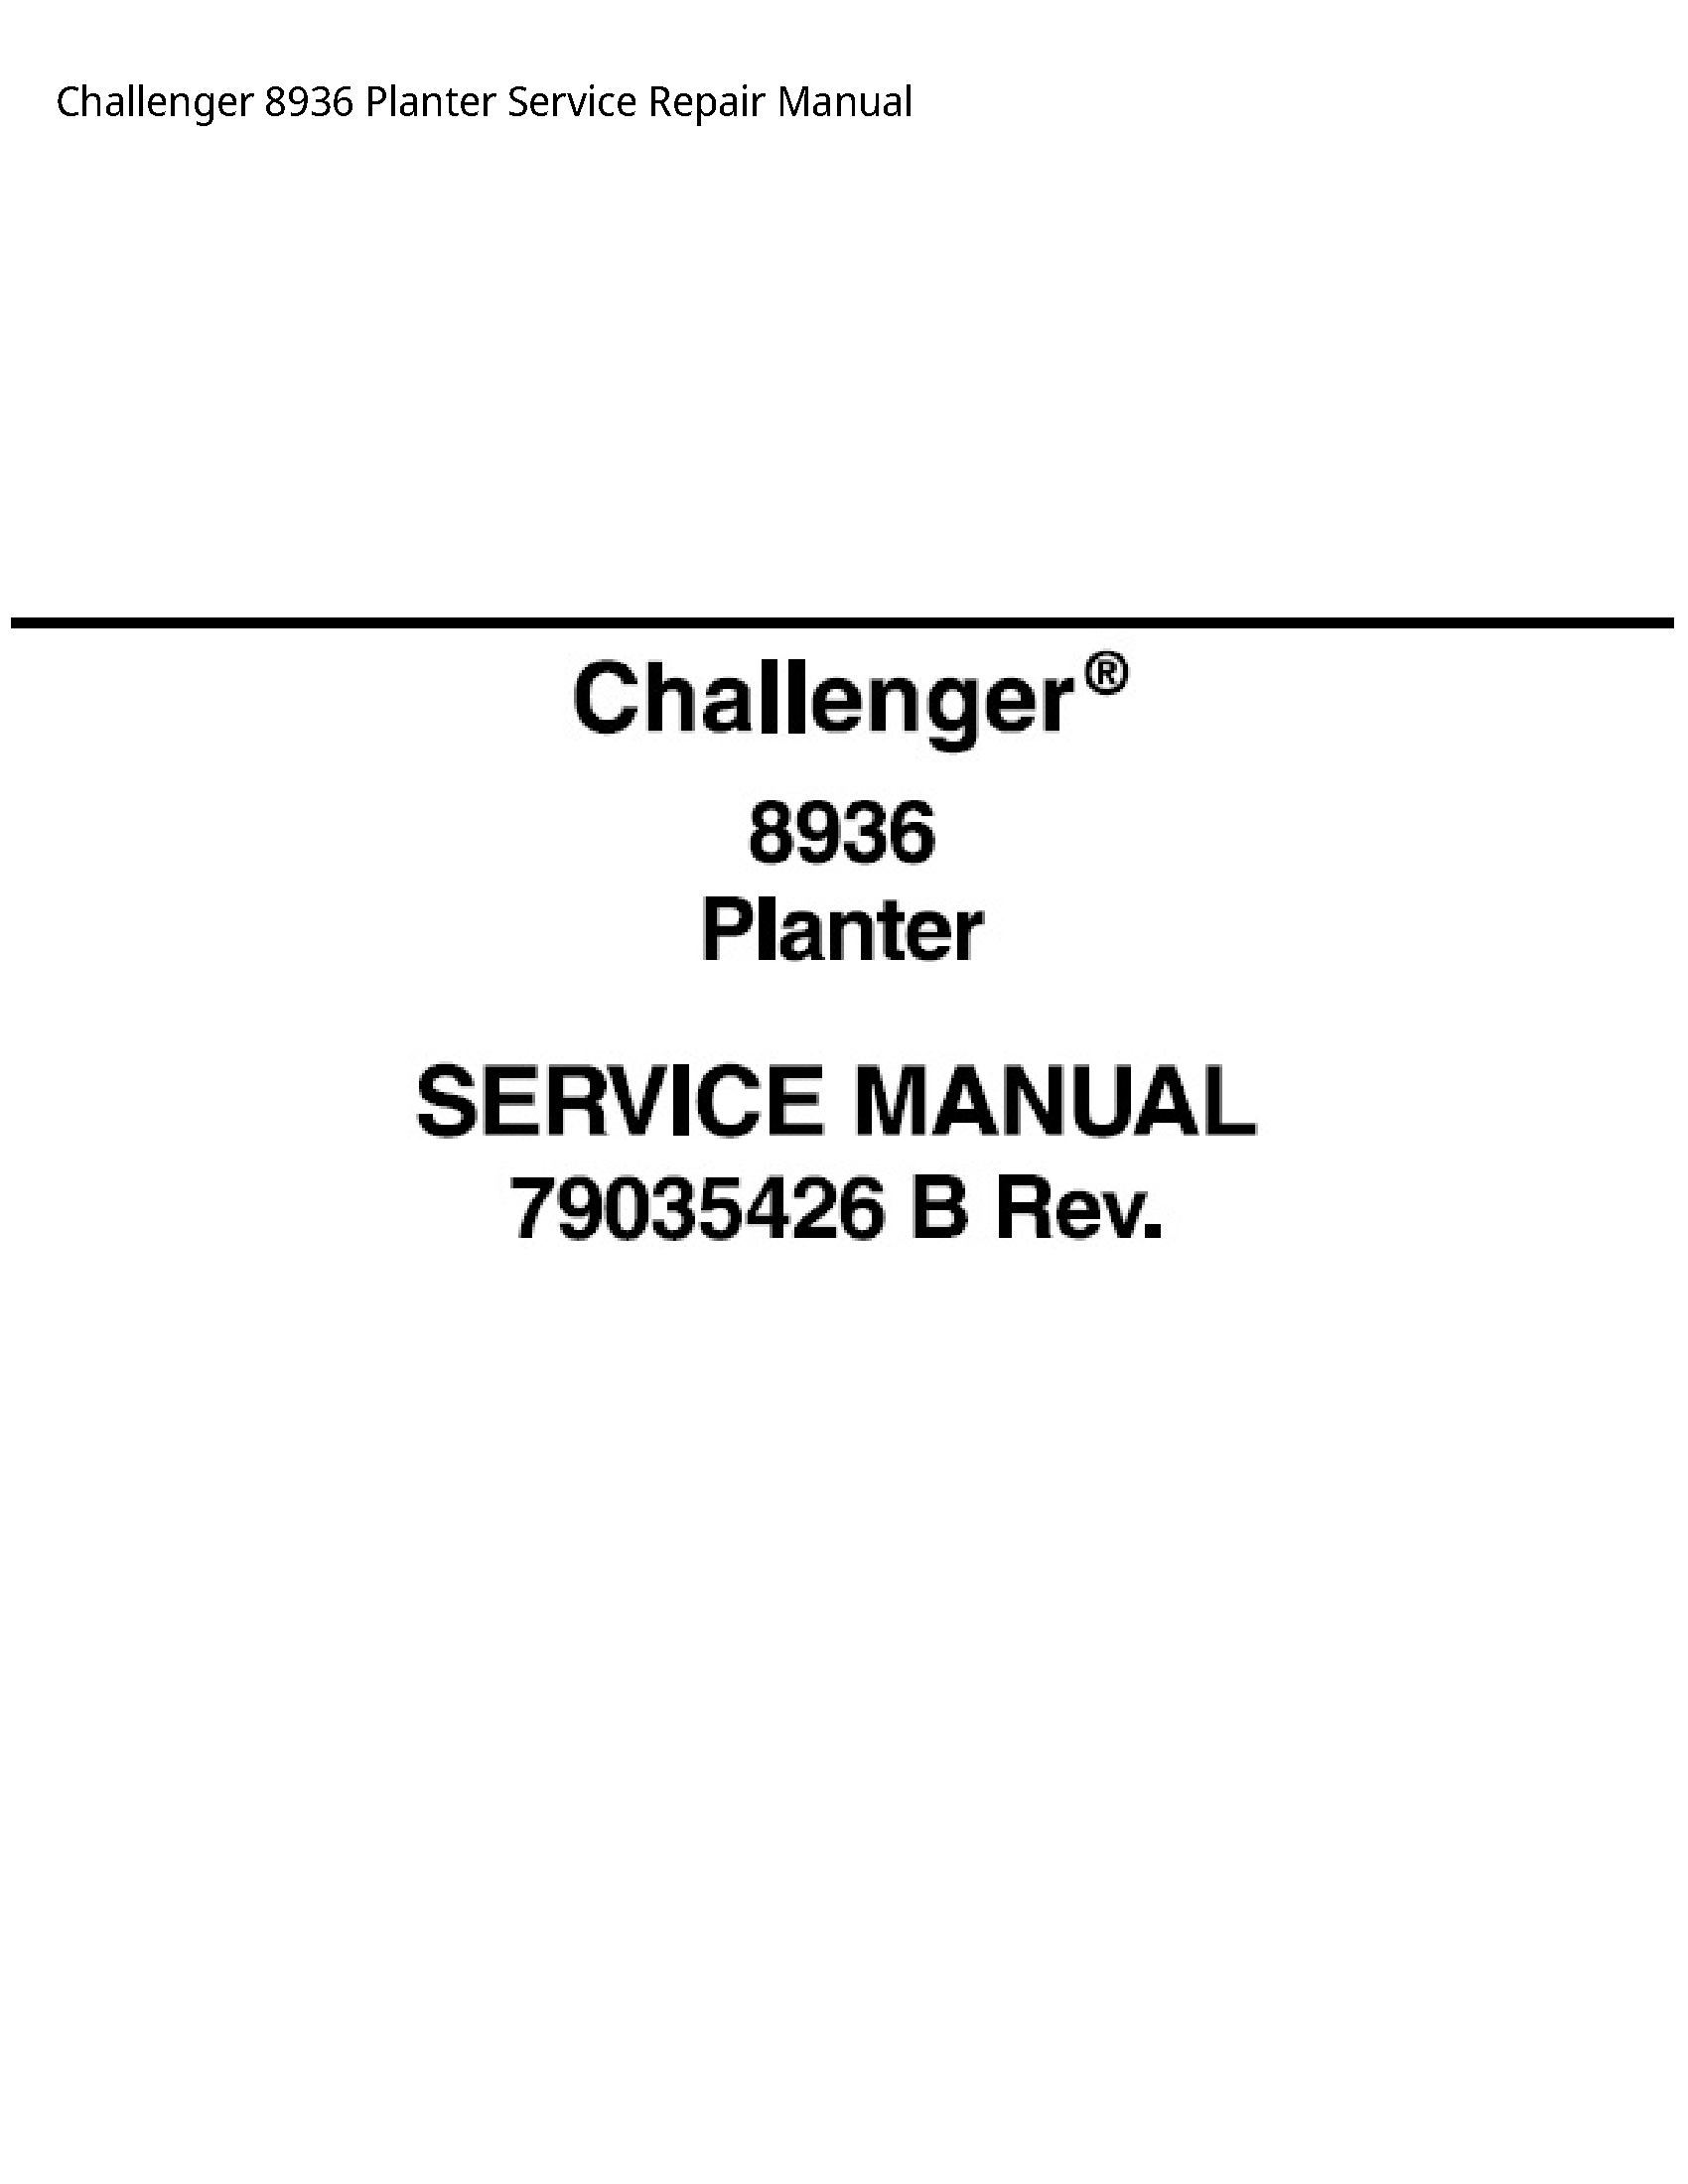 Challenger 8936 Planter manual